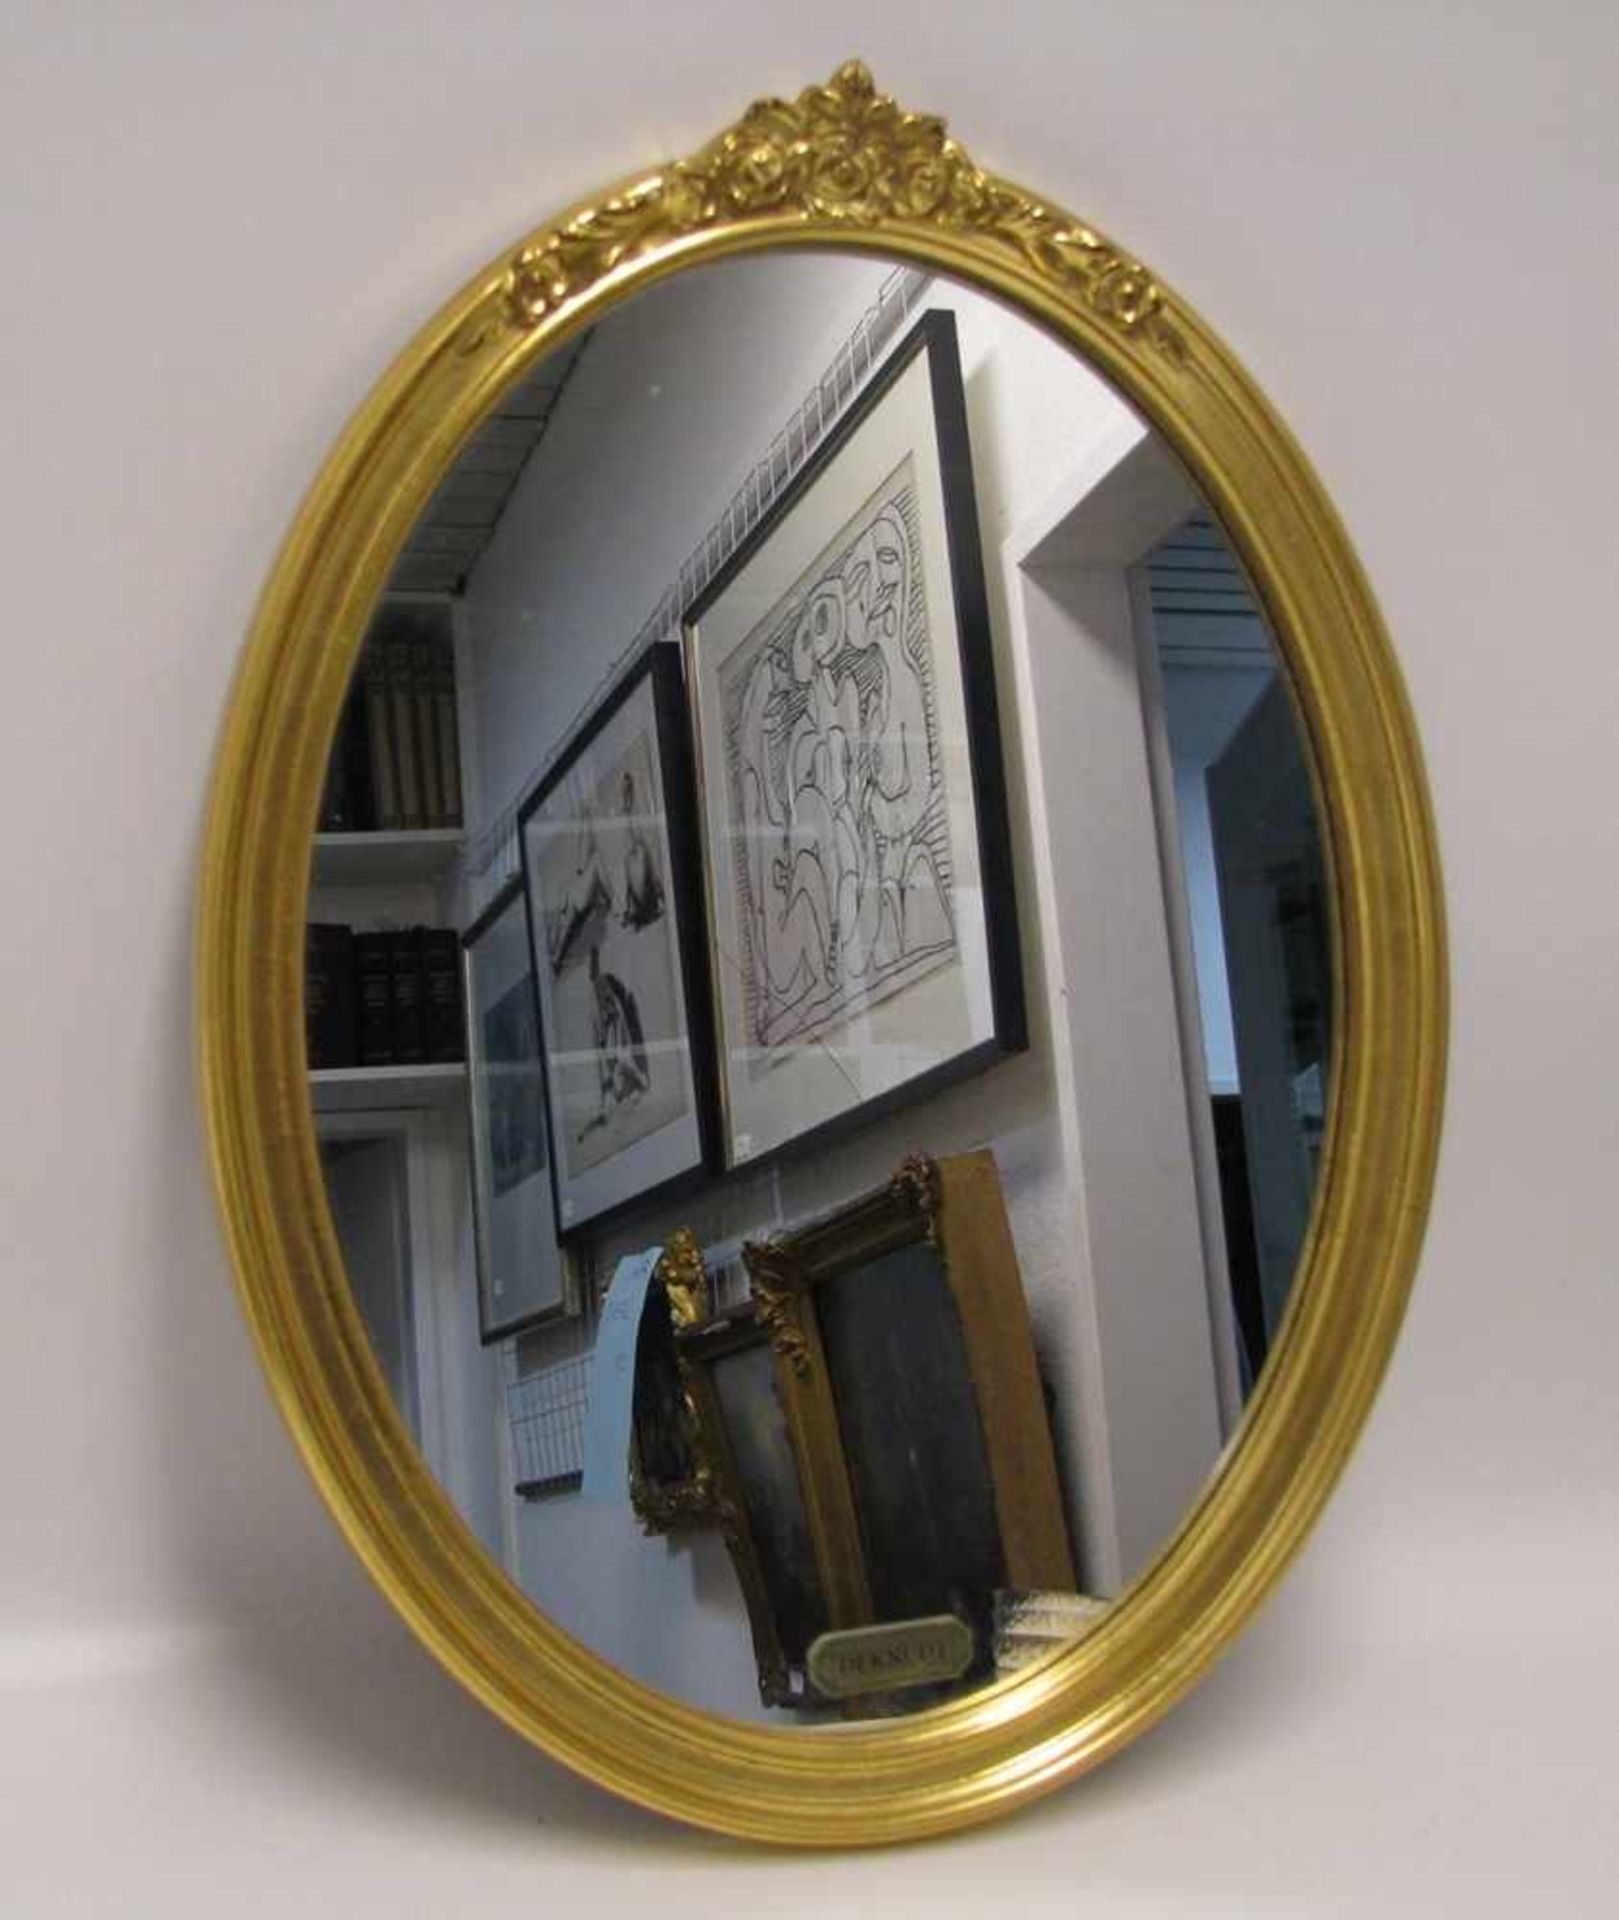 Ovaler Spiegel, Goldrahmen, 47 x 34,5 cm.